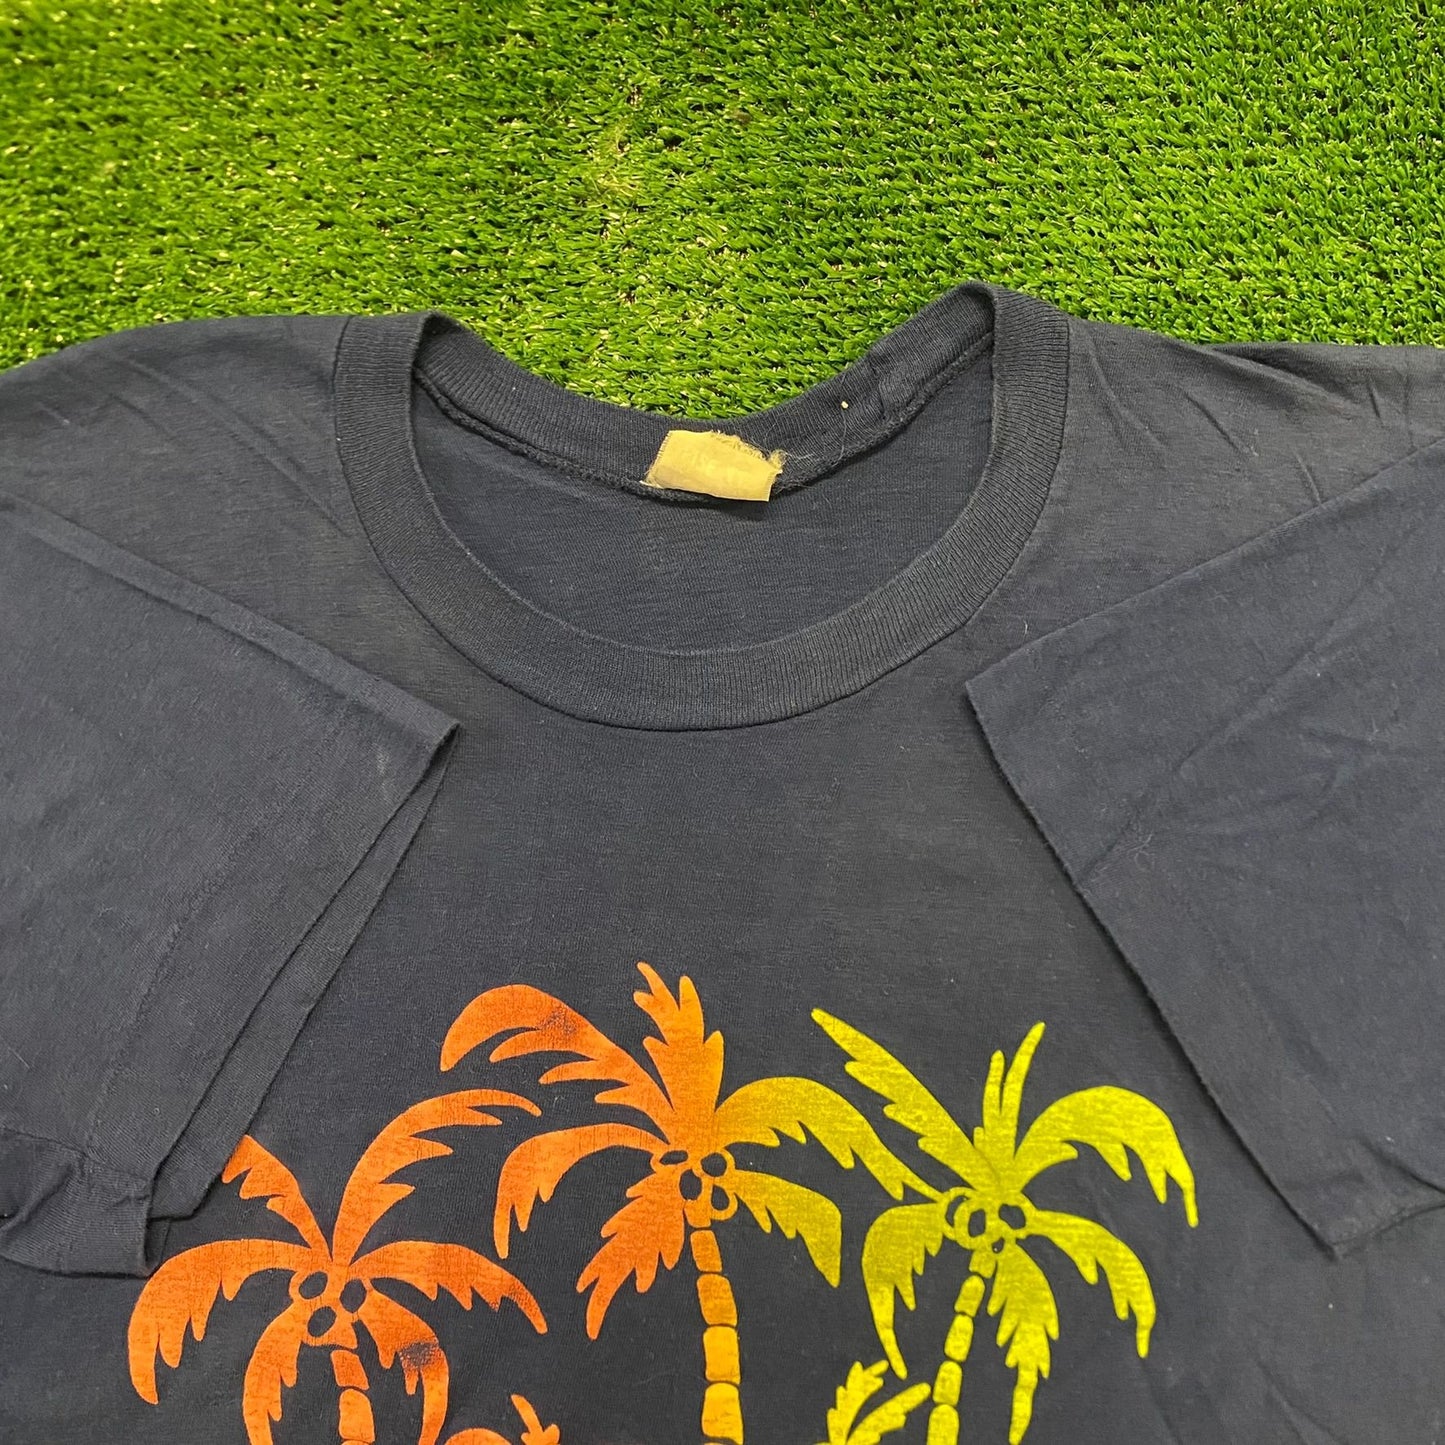 Vintage 80s Bahamas Single Stitch Tourist T-Shirt